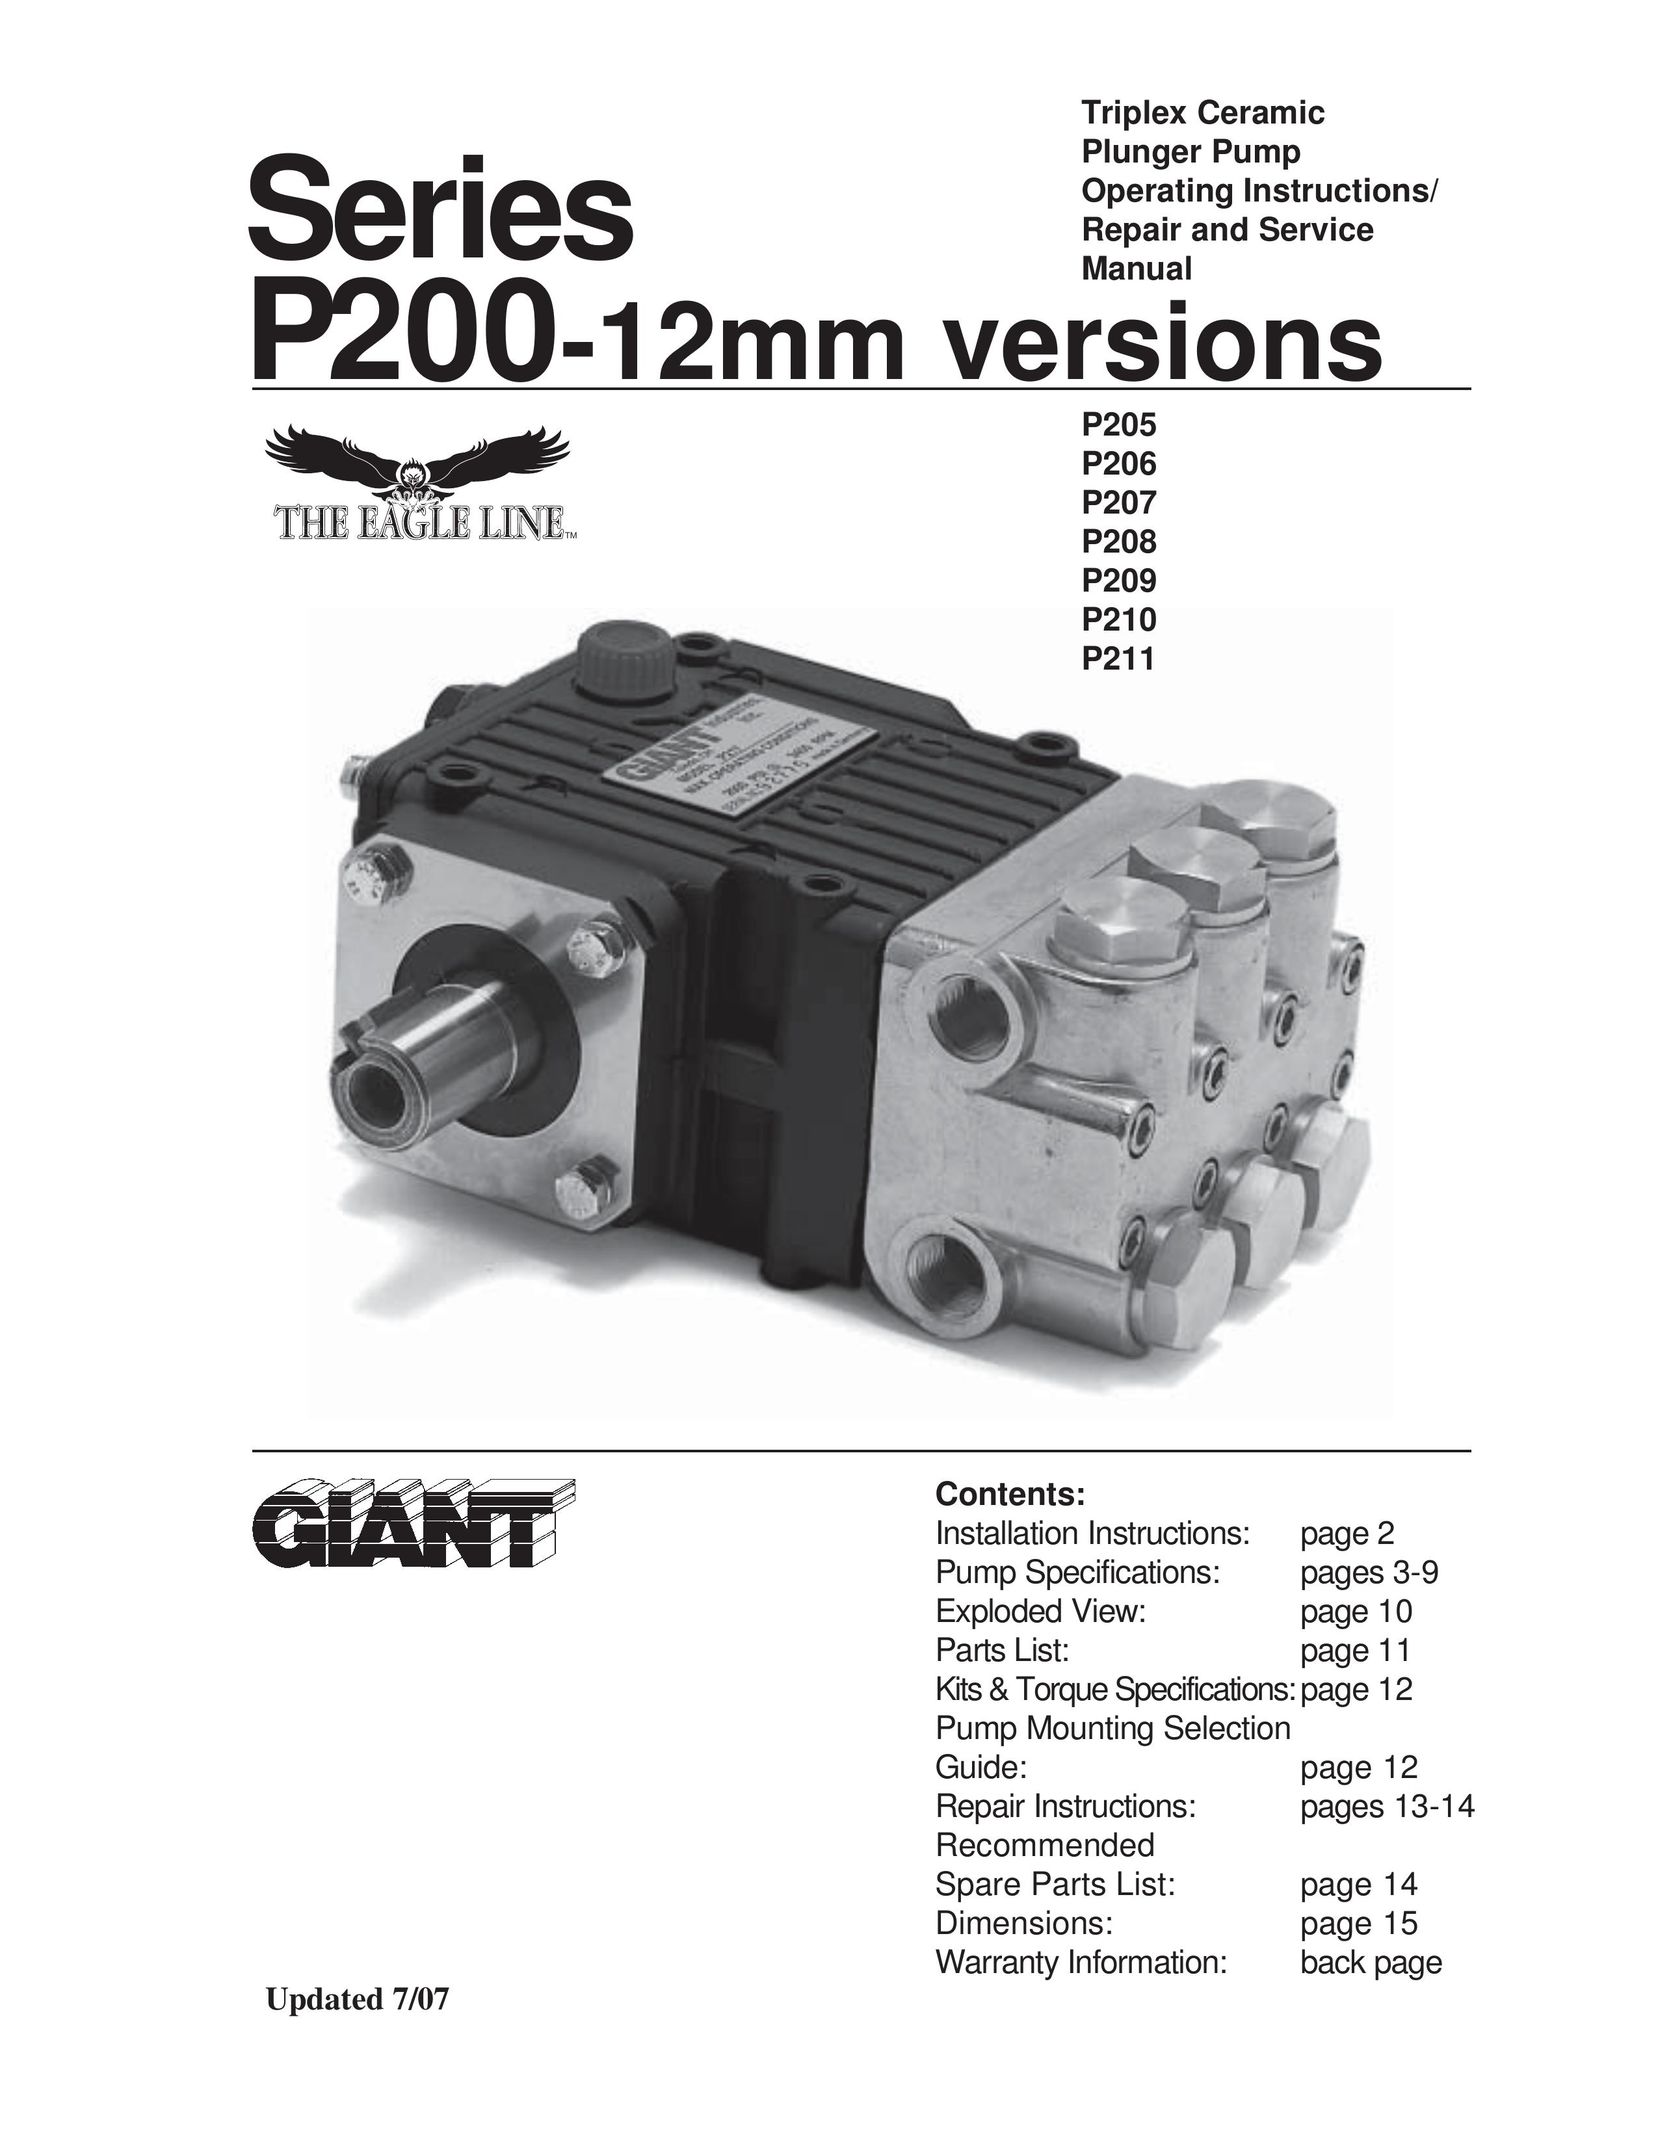 Giant P207 Heat Pump User Manual